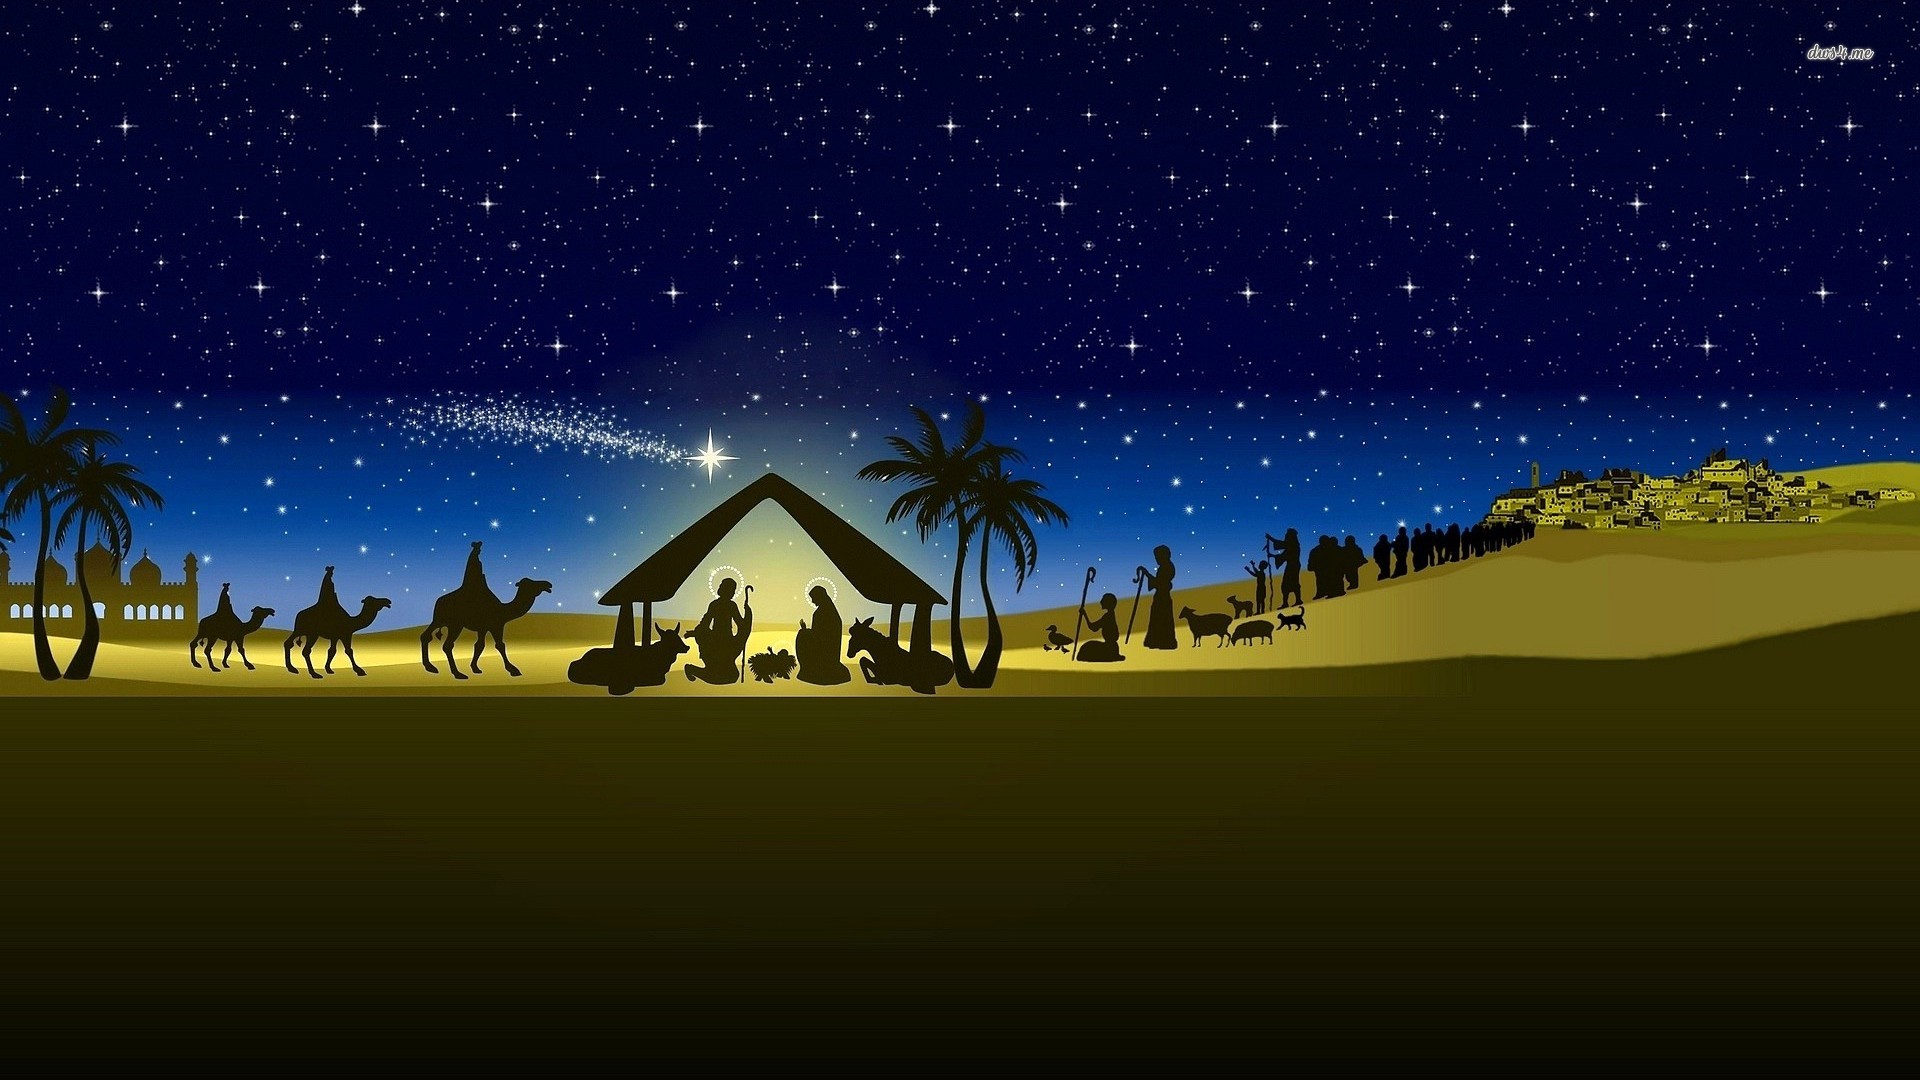 Christmas Nativity Scene Wallpaper - WallpaperSafari